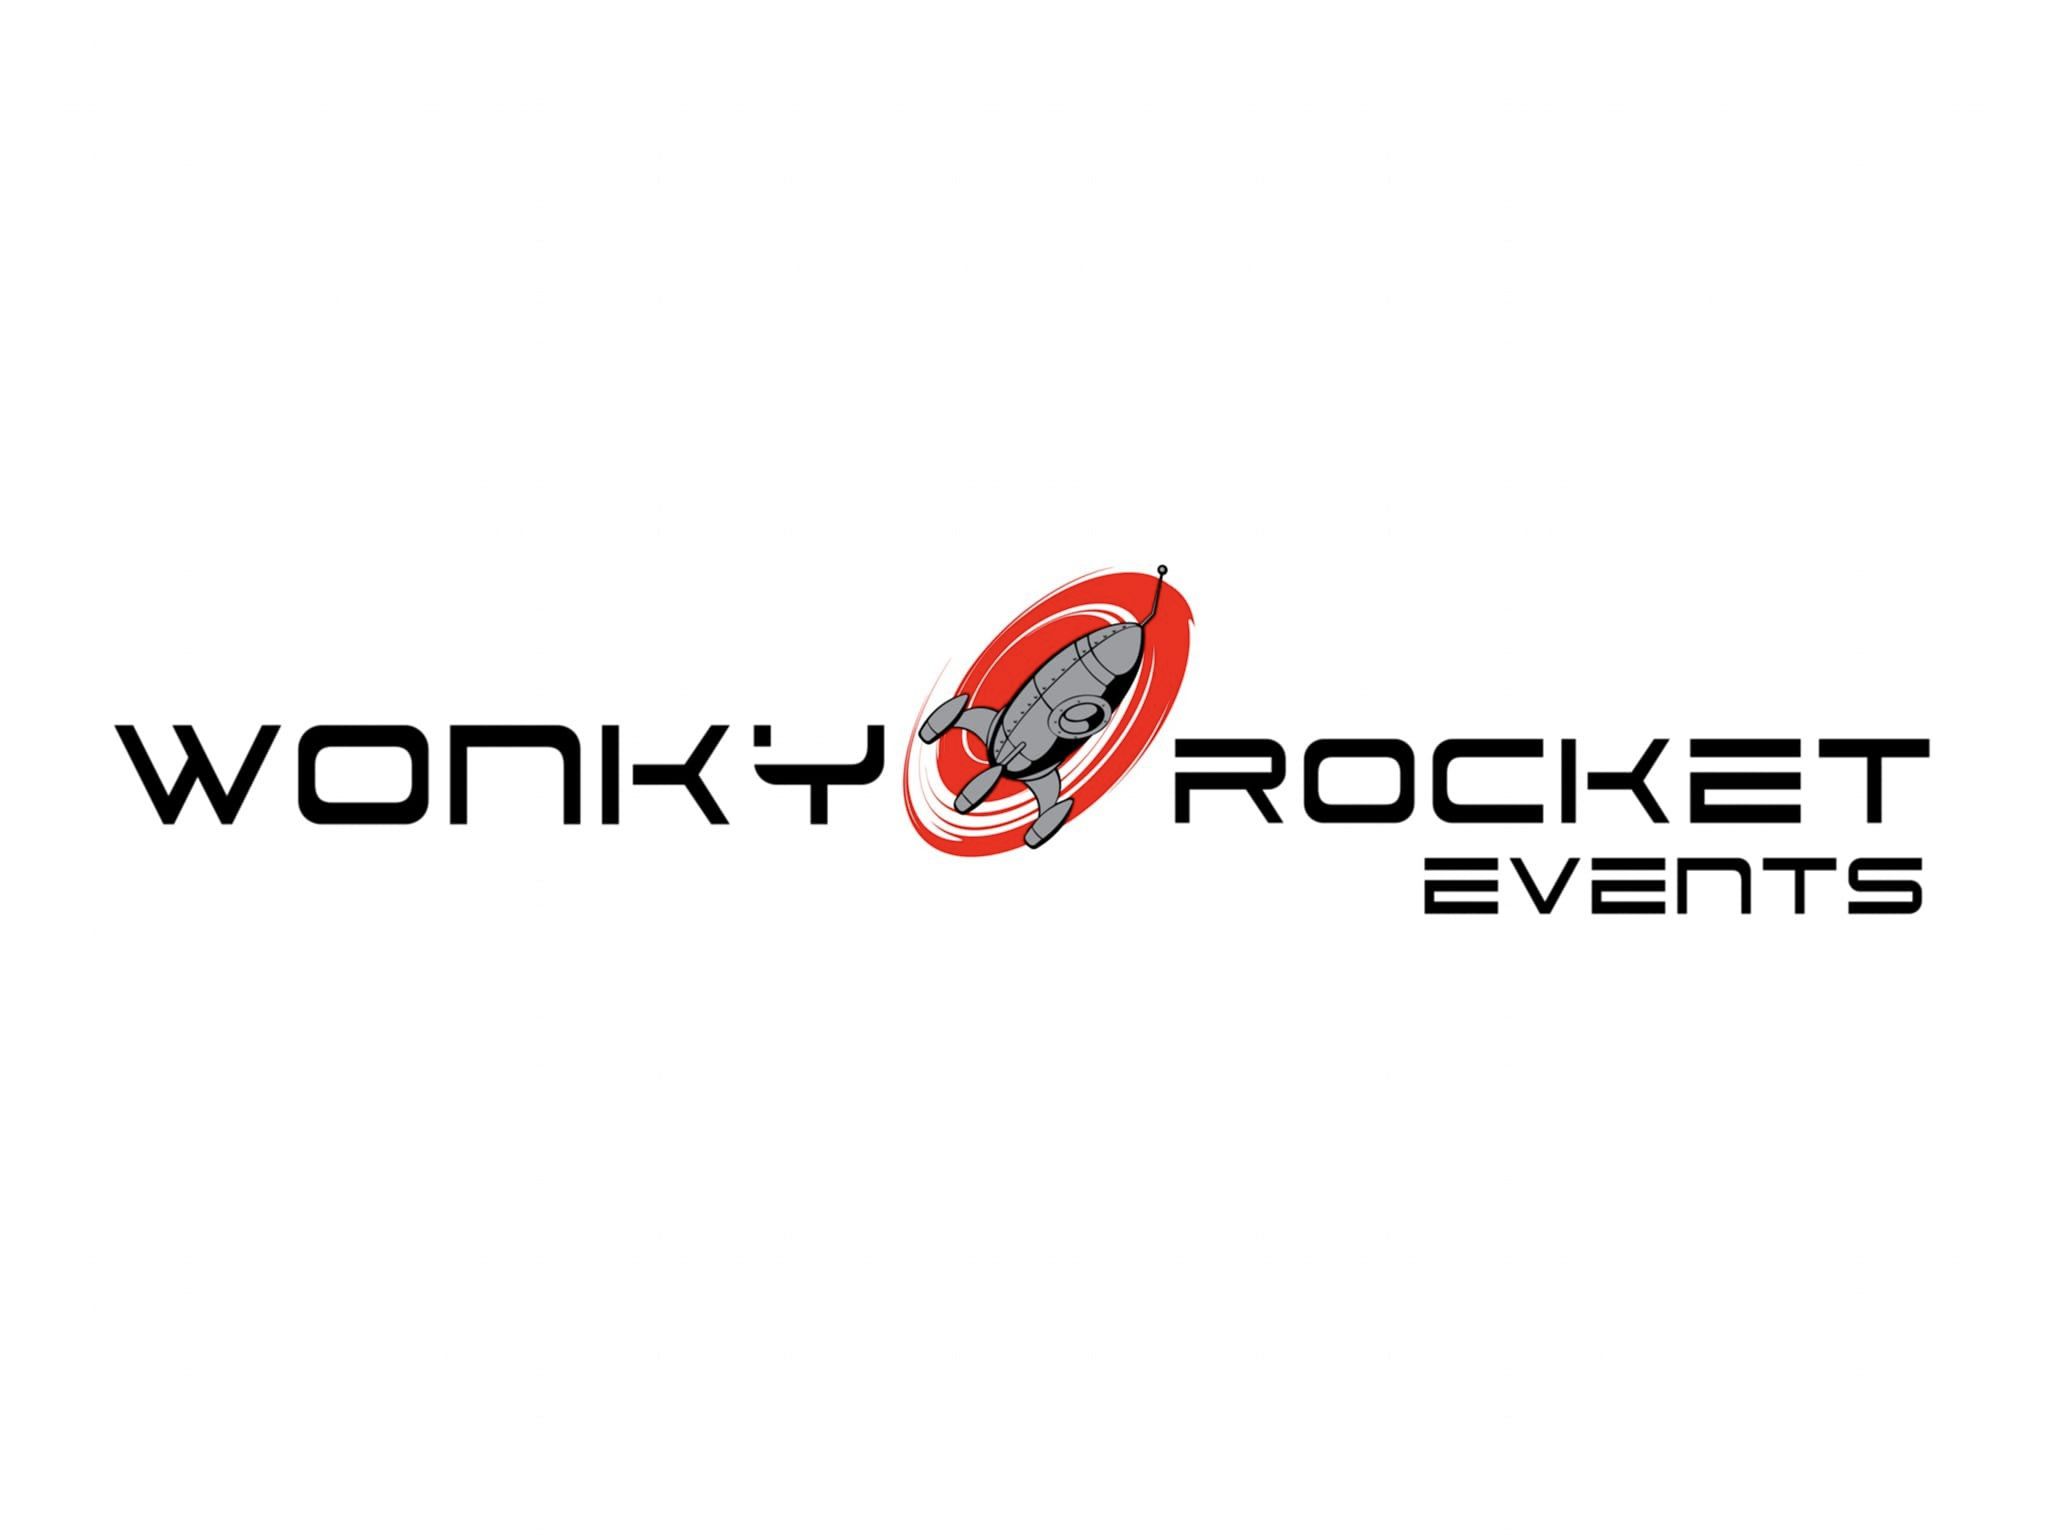 Wonky Rocket Events